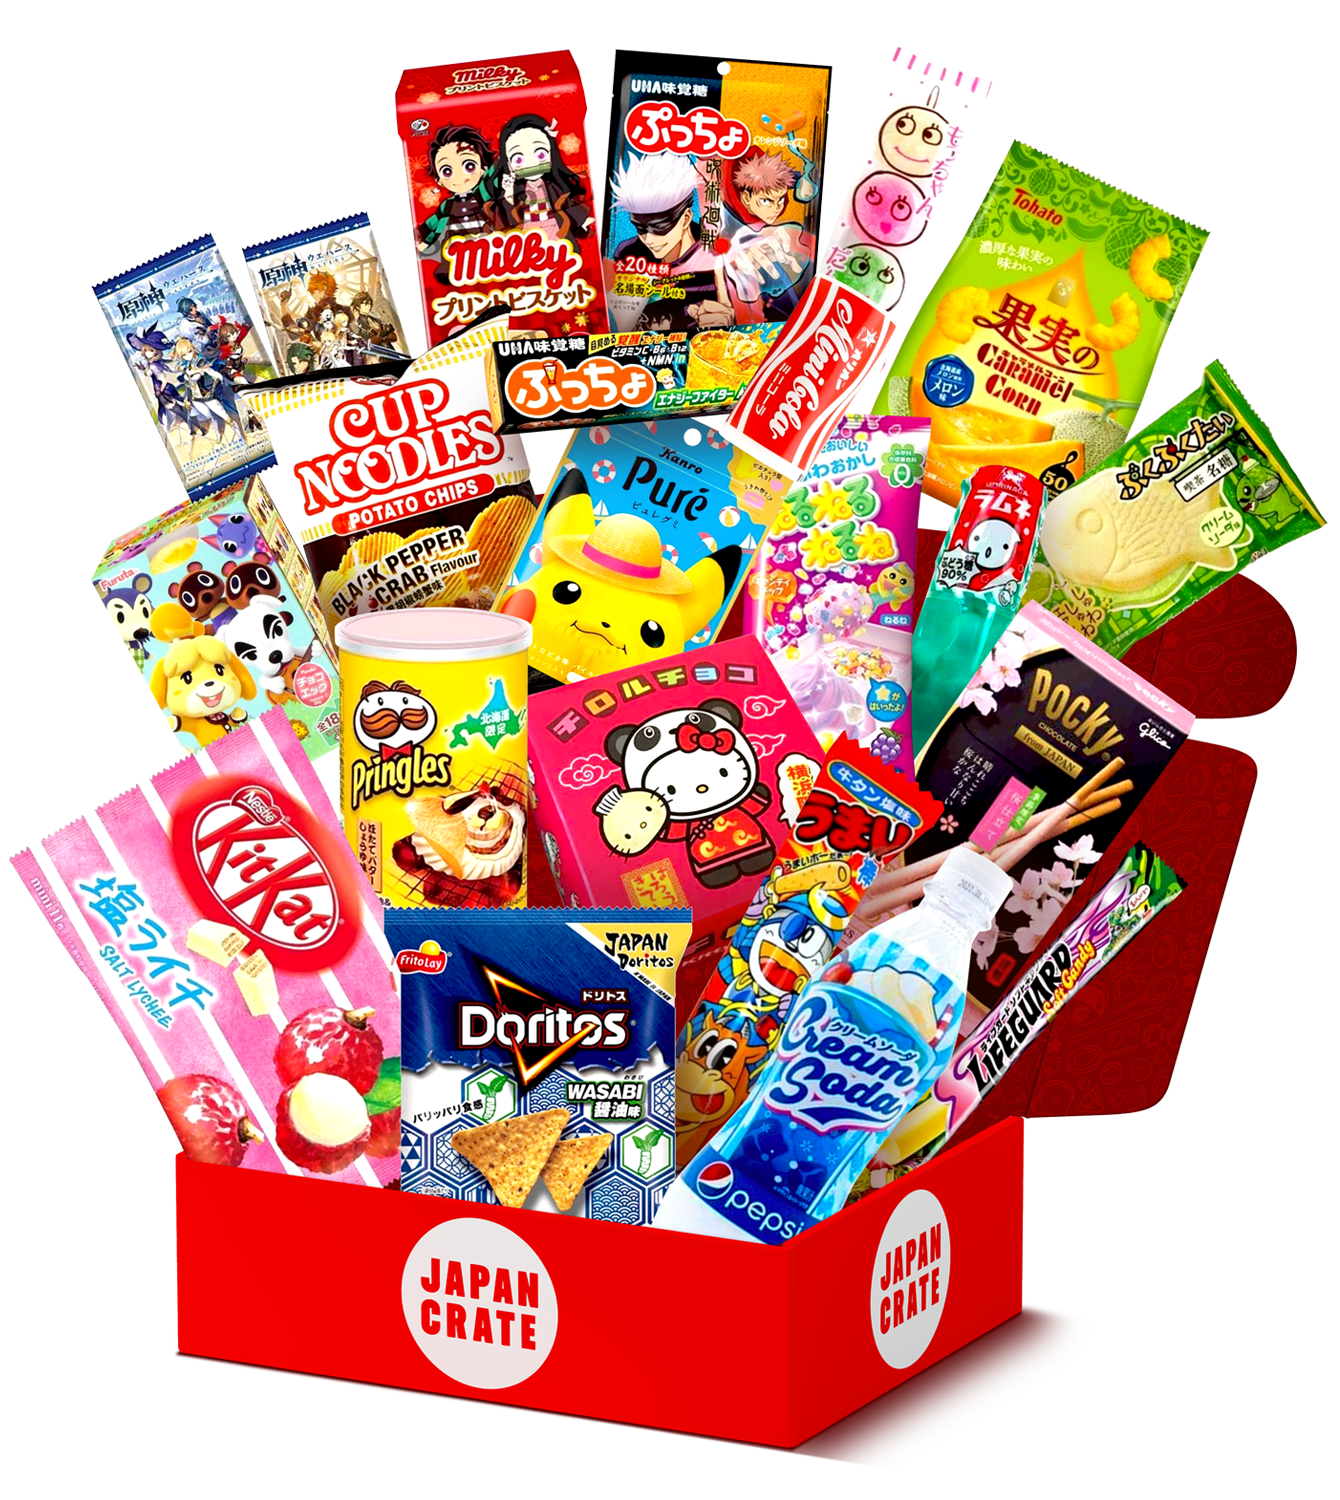 Premium Japan crate